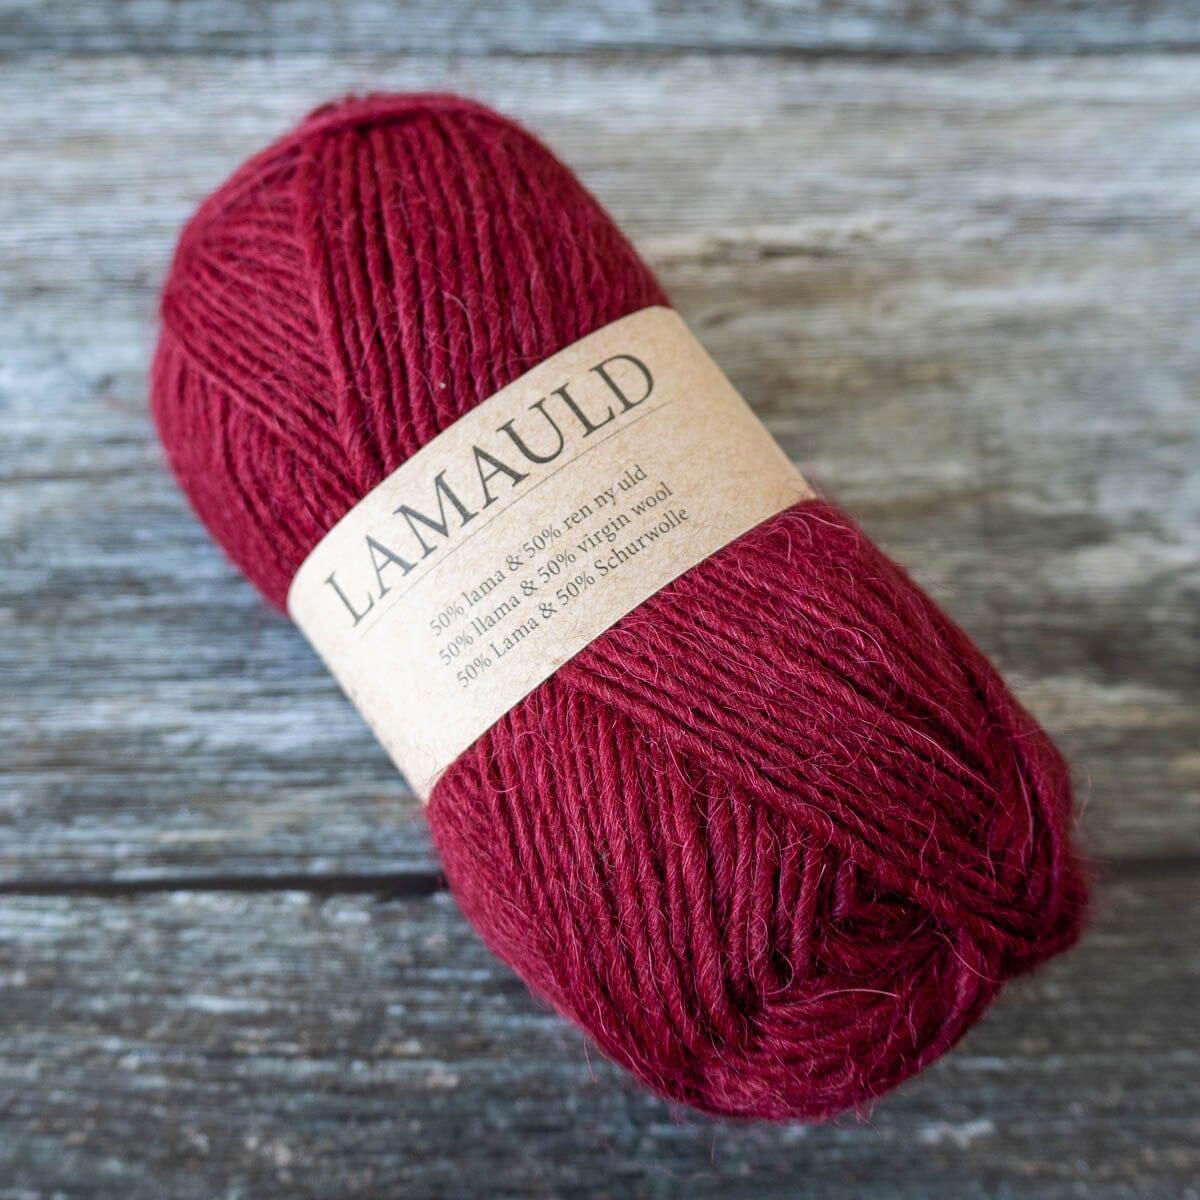 CaMaRose Camarose Lamauld - 6970 Bordeaux Rod - Aran Knitting Yarn